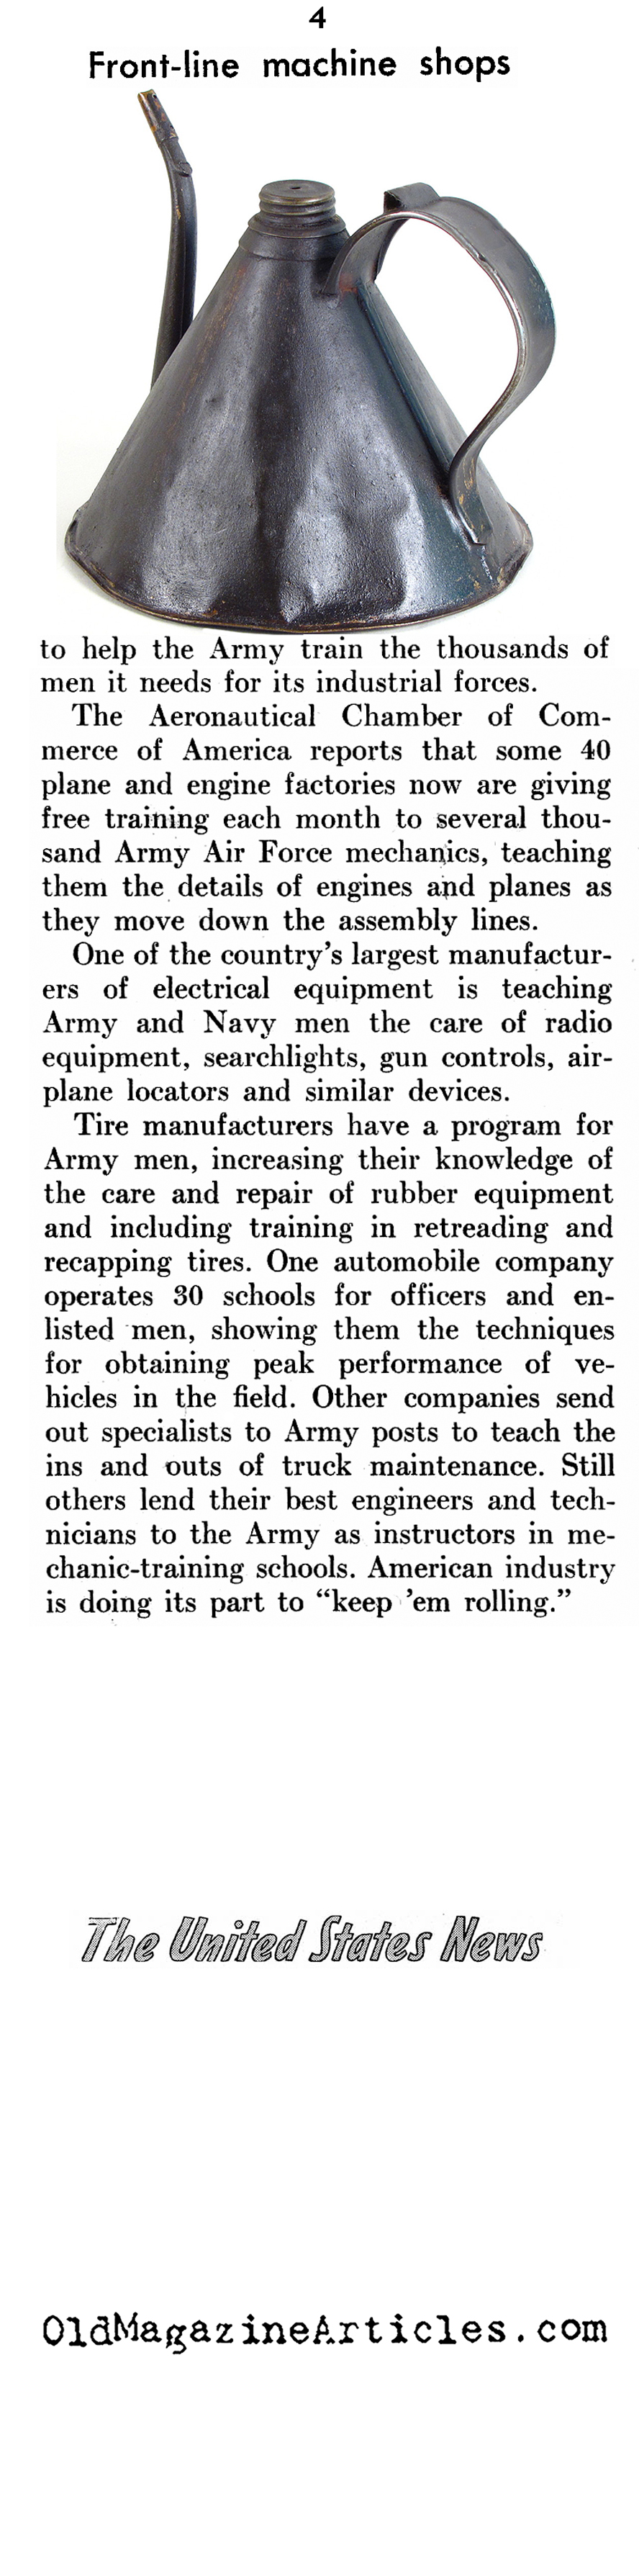 The Front-Line Mechanics (United States News, 1942)